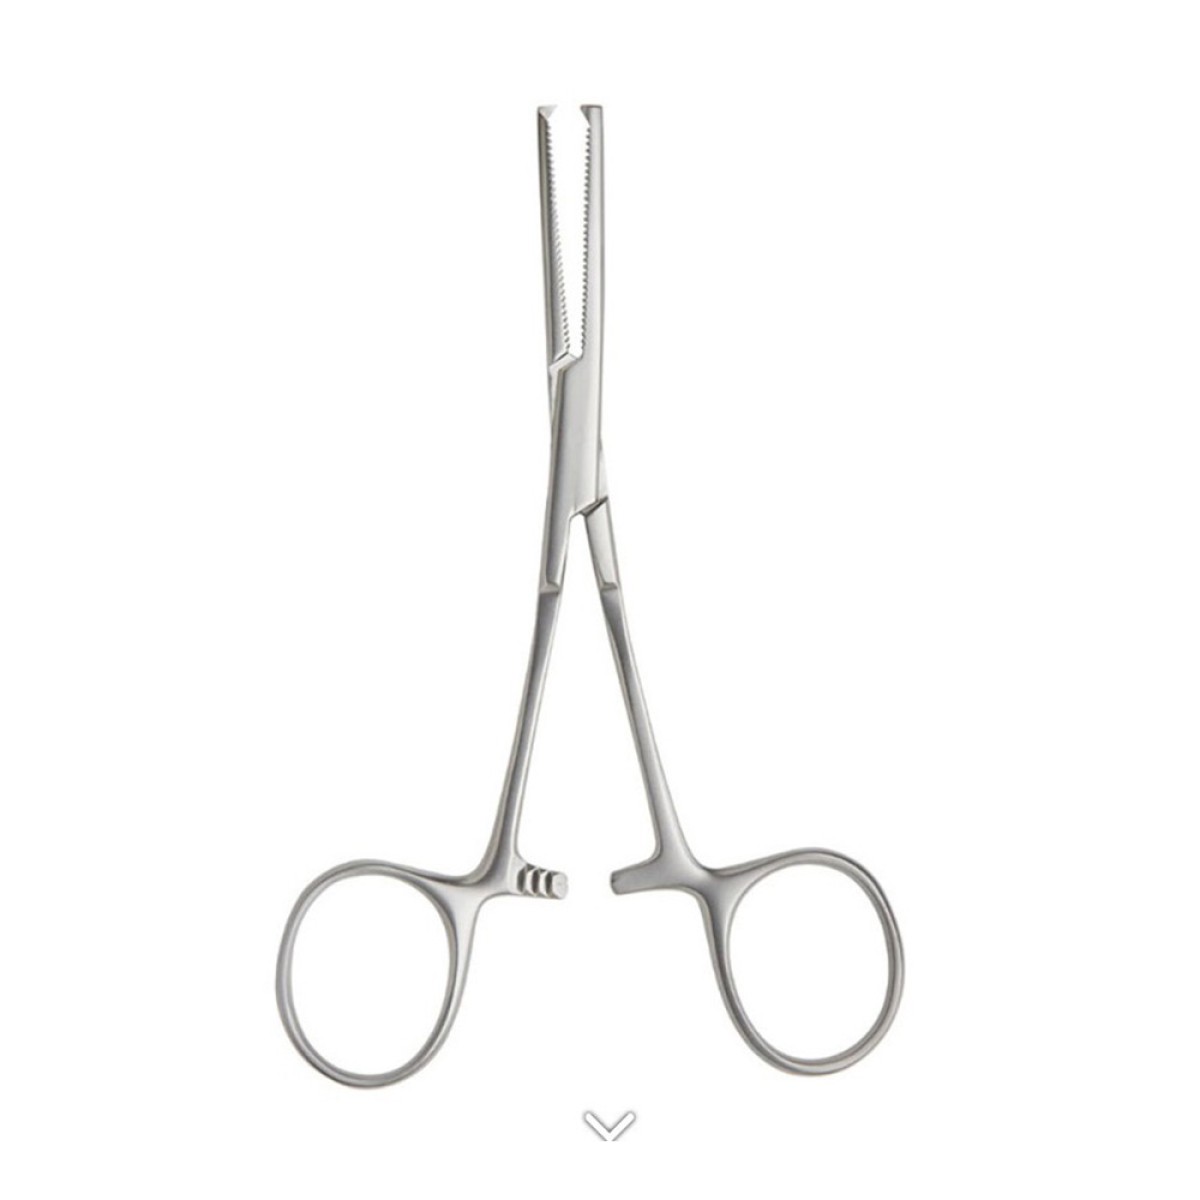 Kocher Forcep I Surgical Instruments I Surgical Instruments Manufacturer I  General Surgical Instruments I Dental Instruments